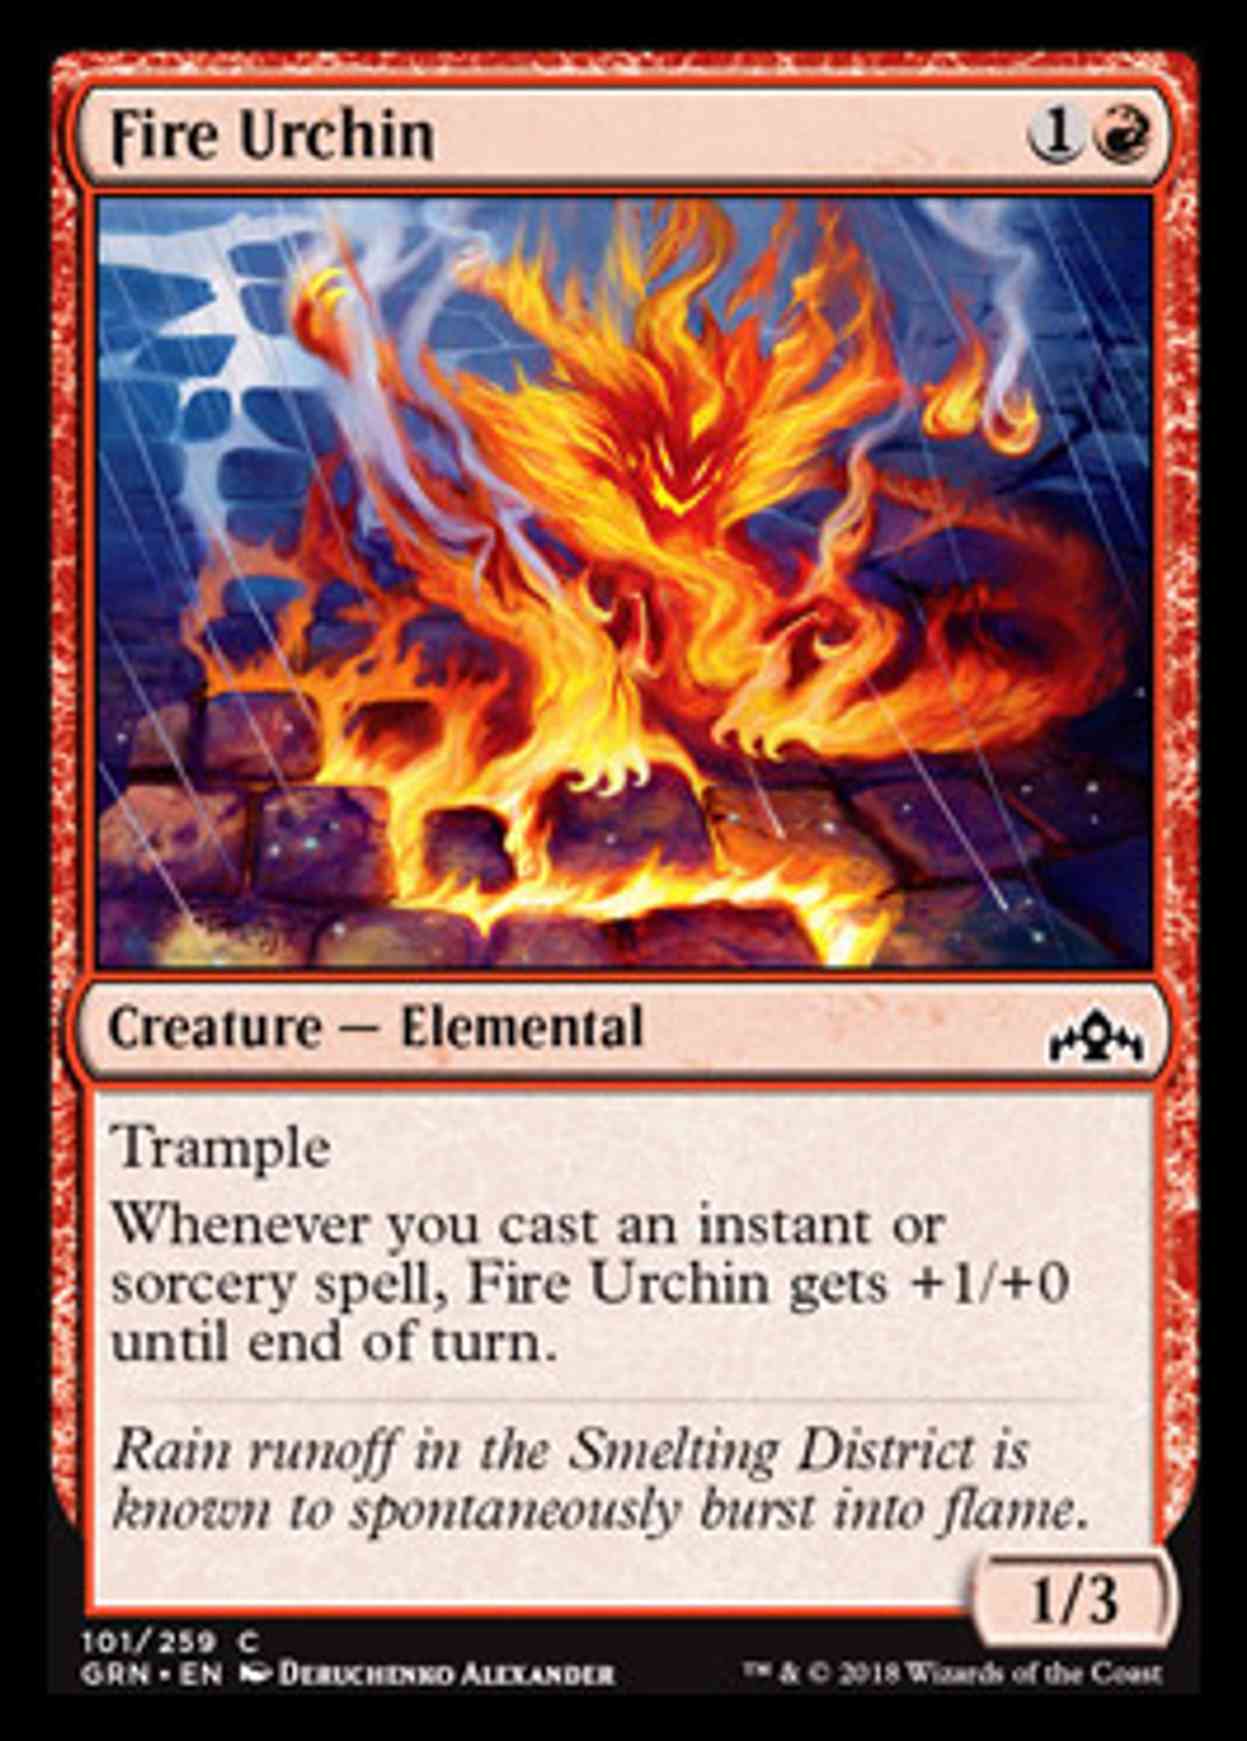 Fire Urchin magic card front